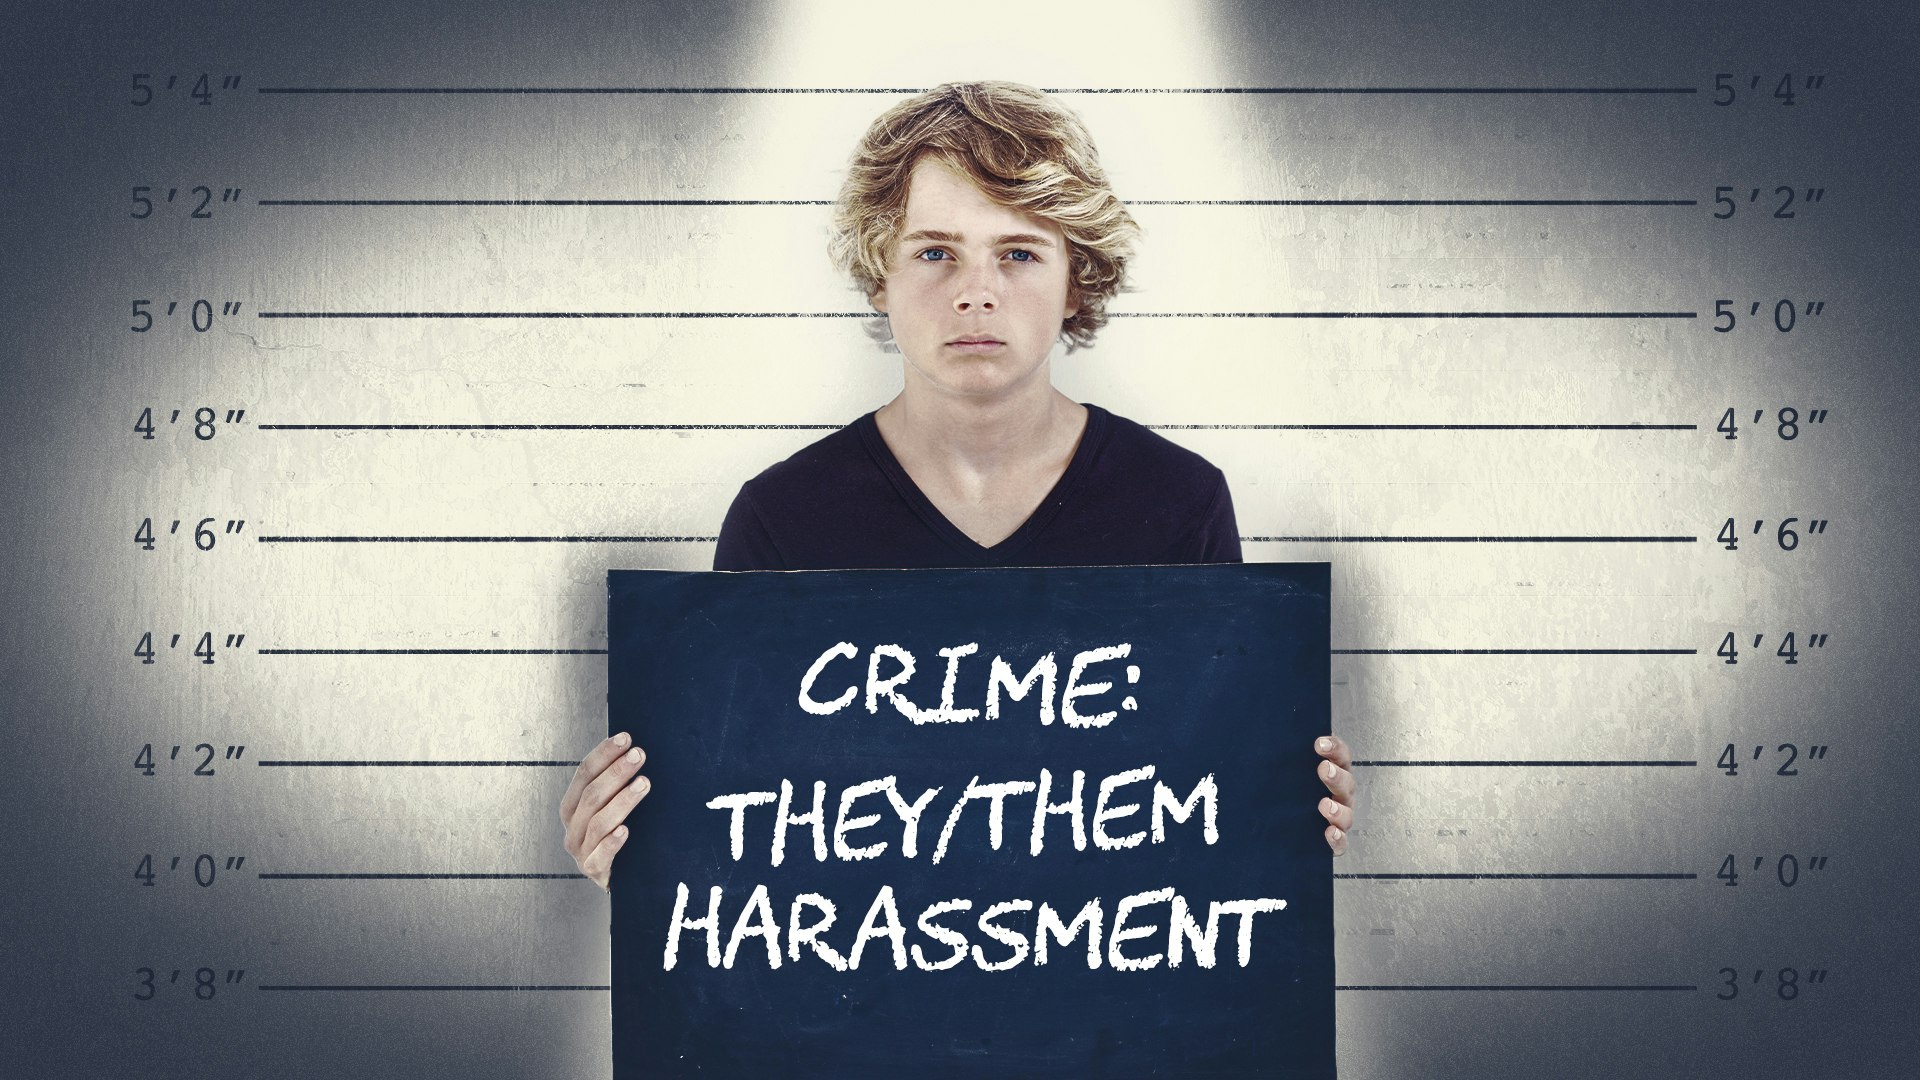 Ep. 1006 - Pronoun Lunatics Turn Students Into Sexual Harassment Criminals